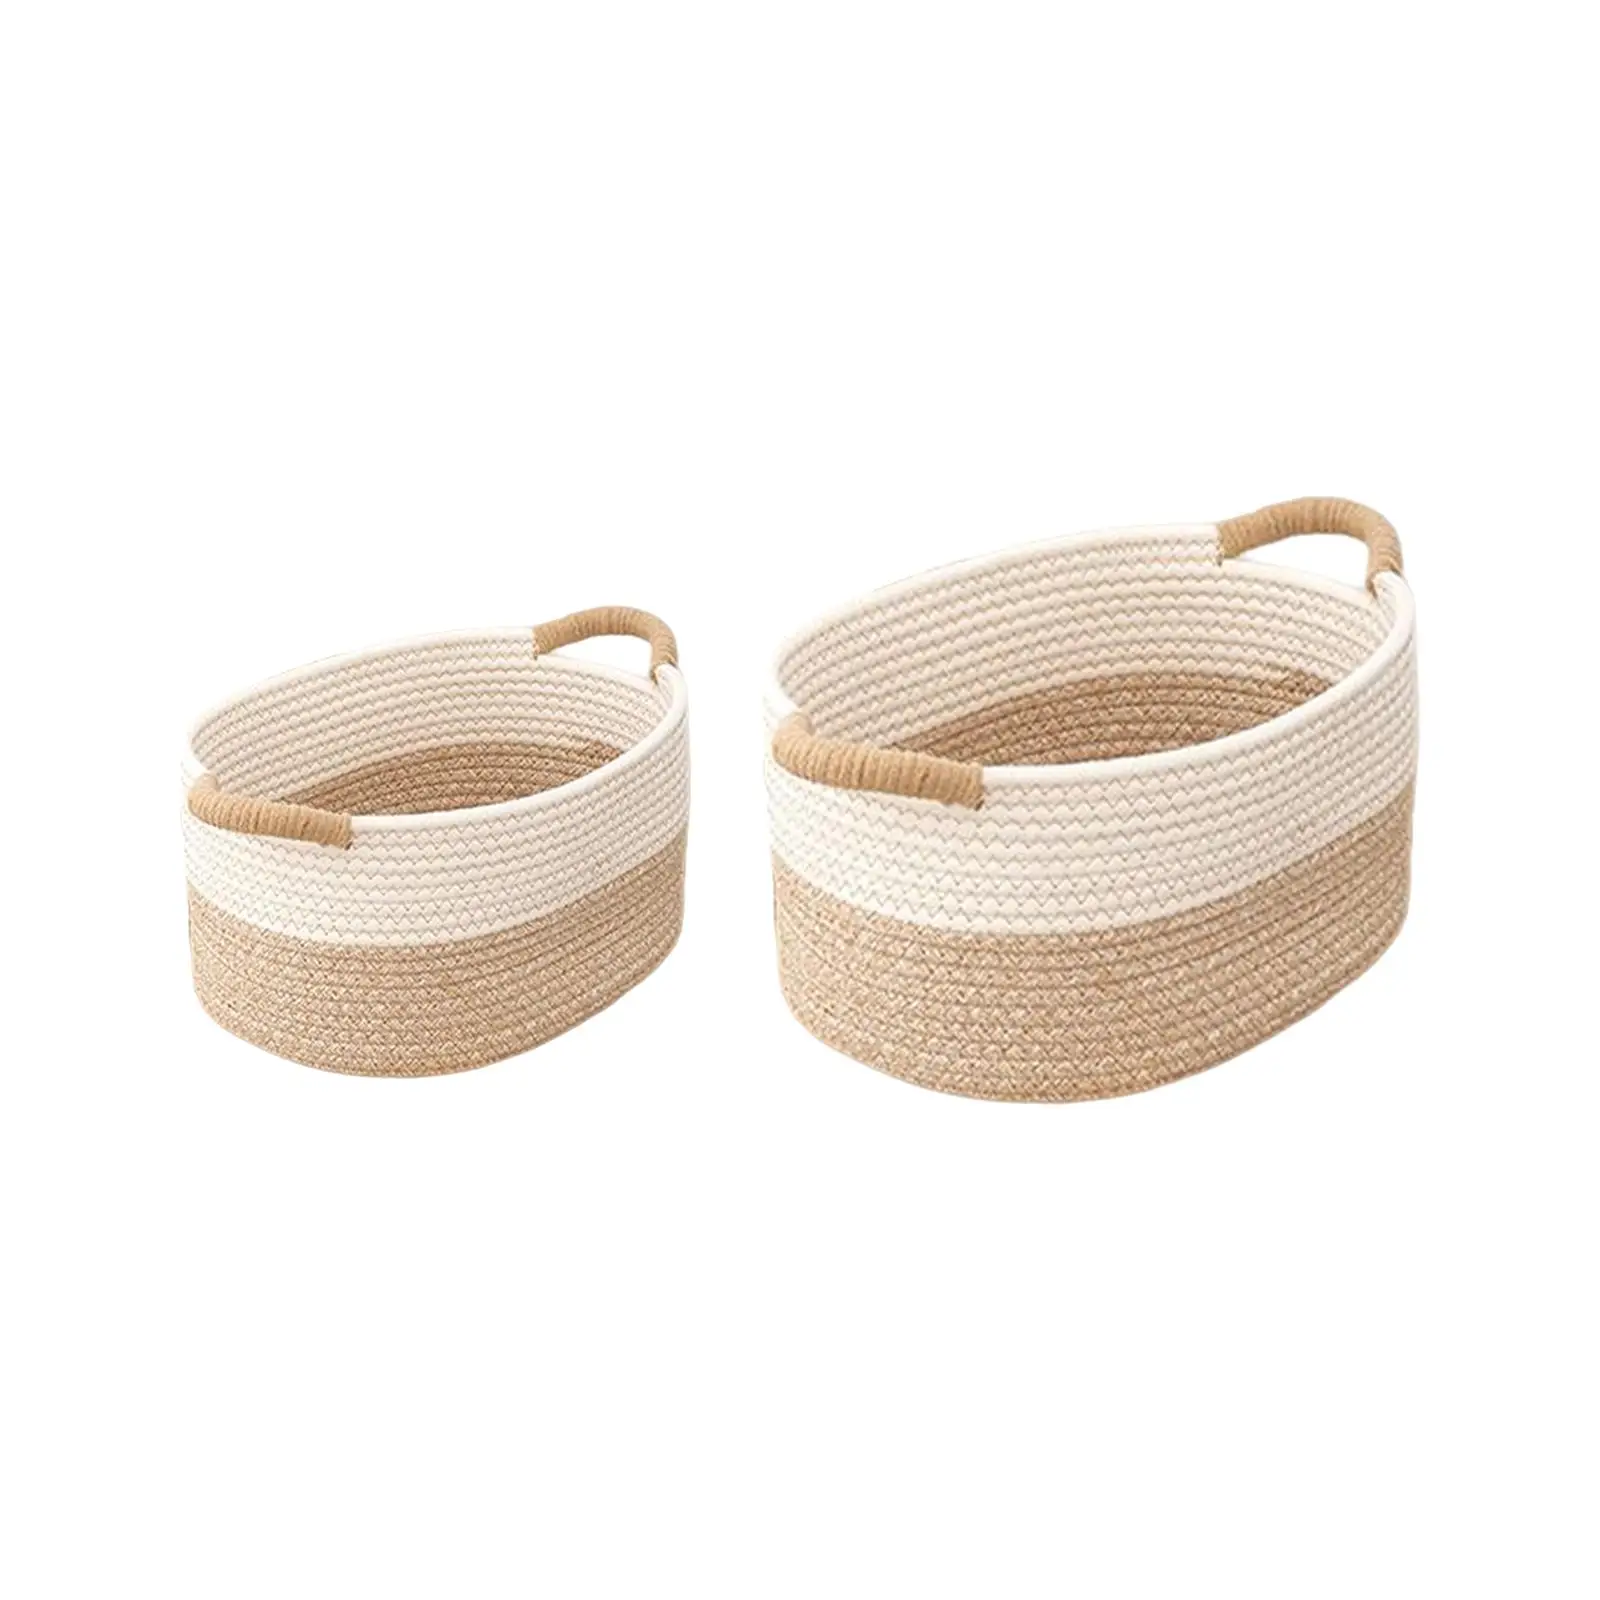 Rope Woven Baskets for Organizing Storage Basket Basket Portable Gift Basket Empty for Bathroom Home Nursery Desktop Books